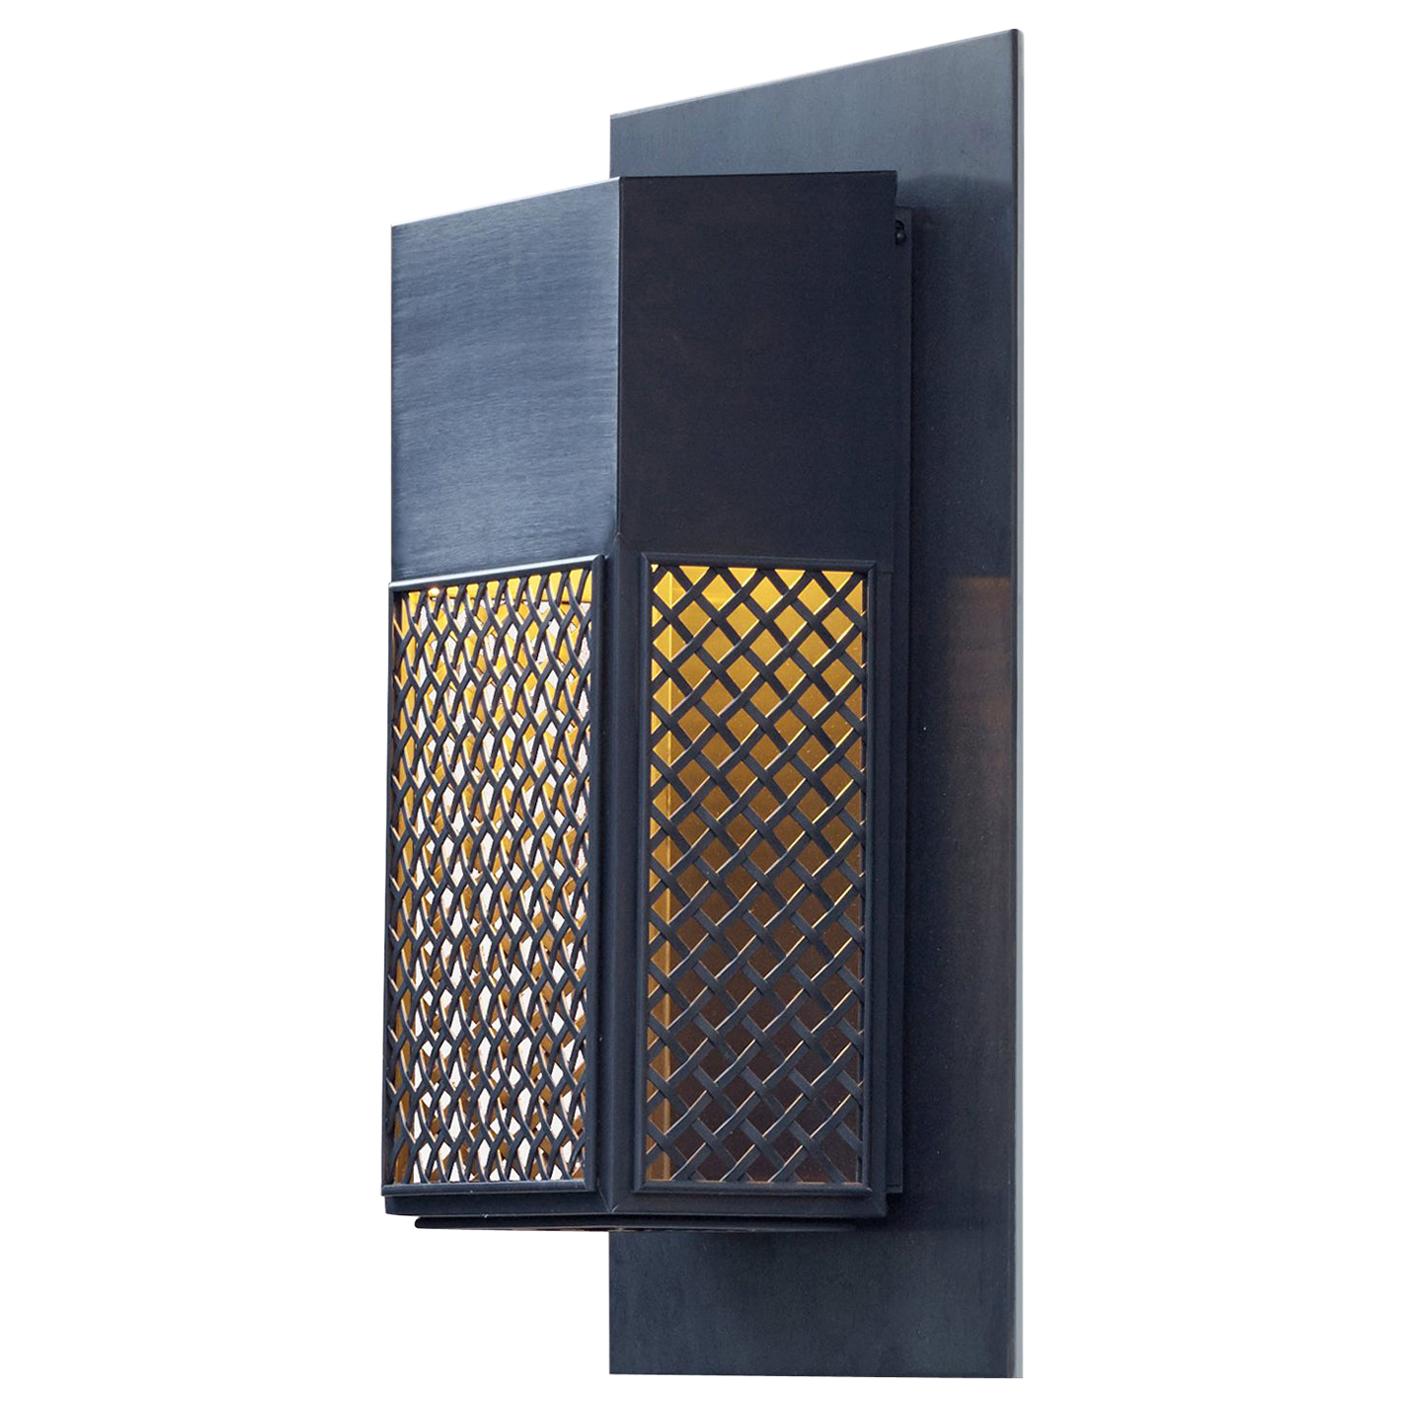 Tekna Maddox Wall Light with Dark Bronze Finish and Optional Wall Plate 